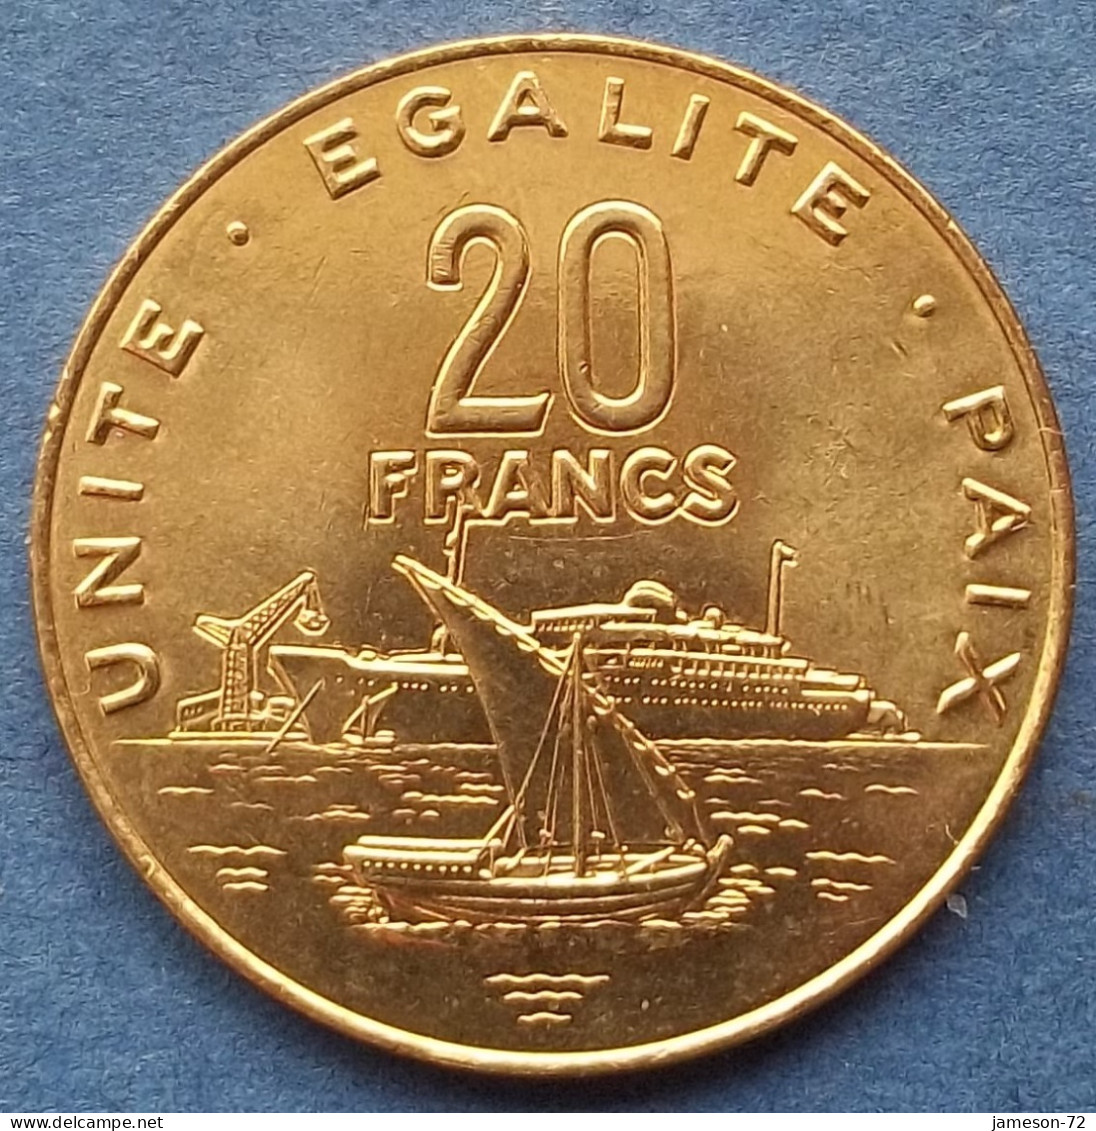 DJIBOUTI - 20 Francs 2007 "Sailboat" KM# 24 Republic Standard Coinage - Edelweiss Coins - Dschibuti